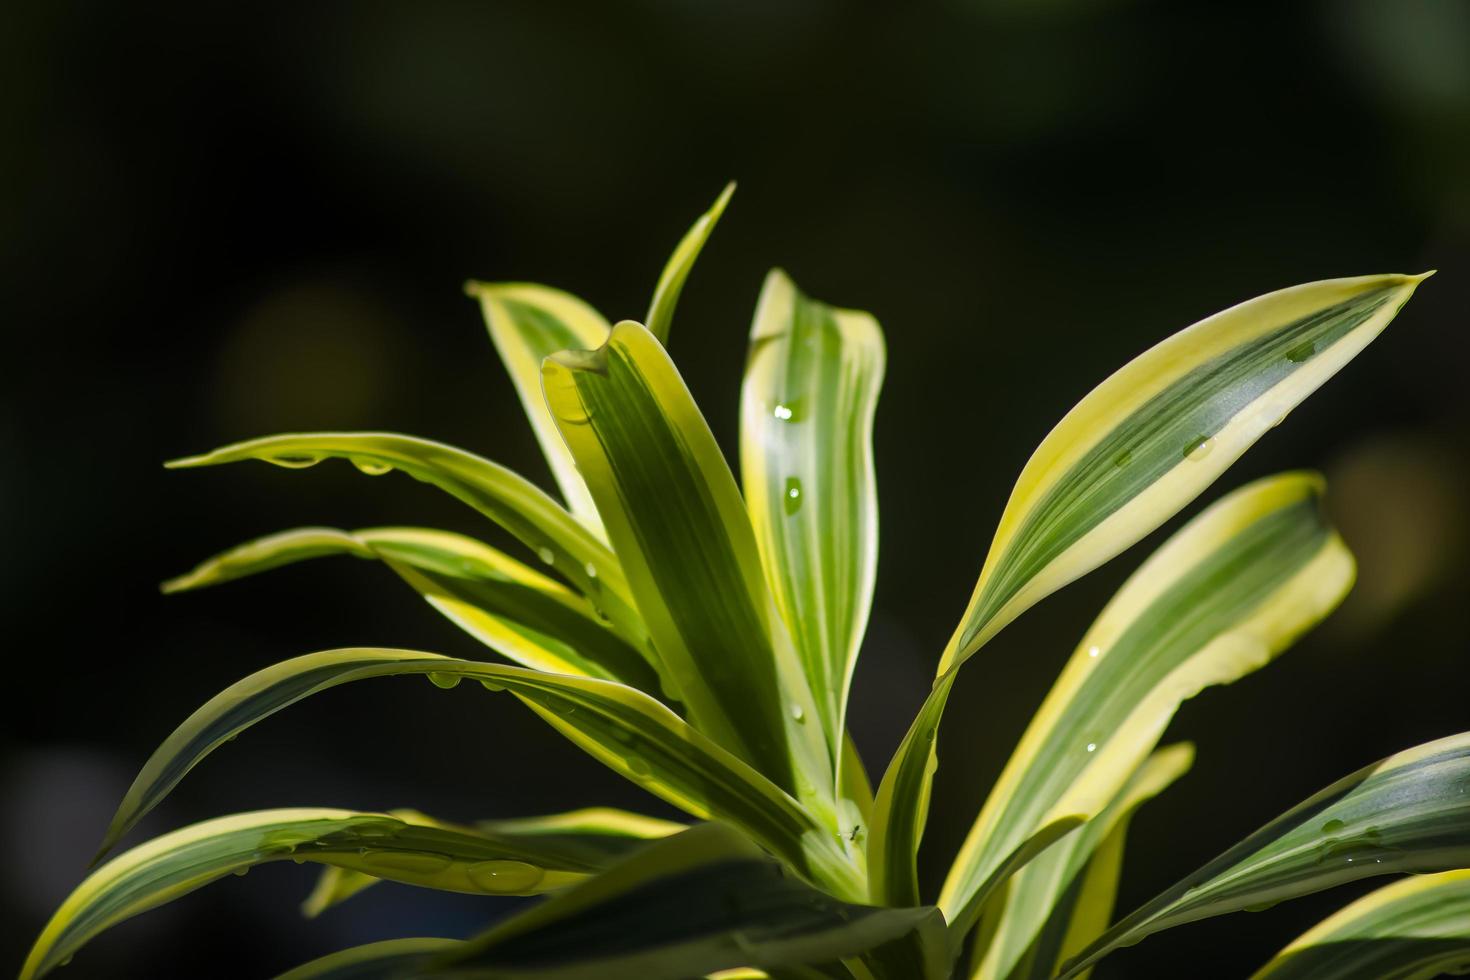 de aglaonema-plant die bekend staat als chinese evergreen foto